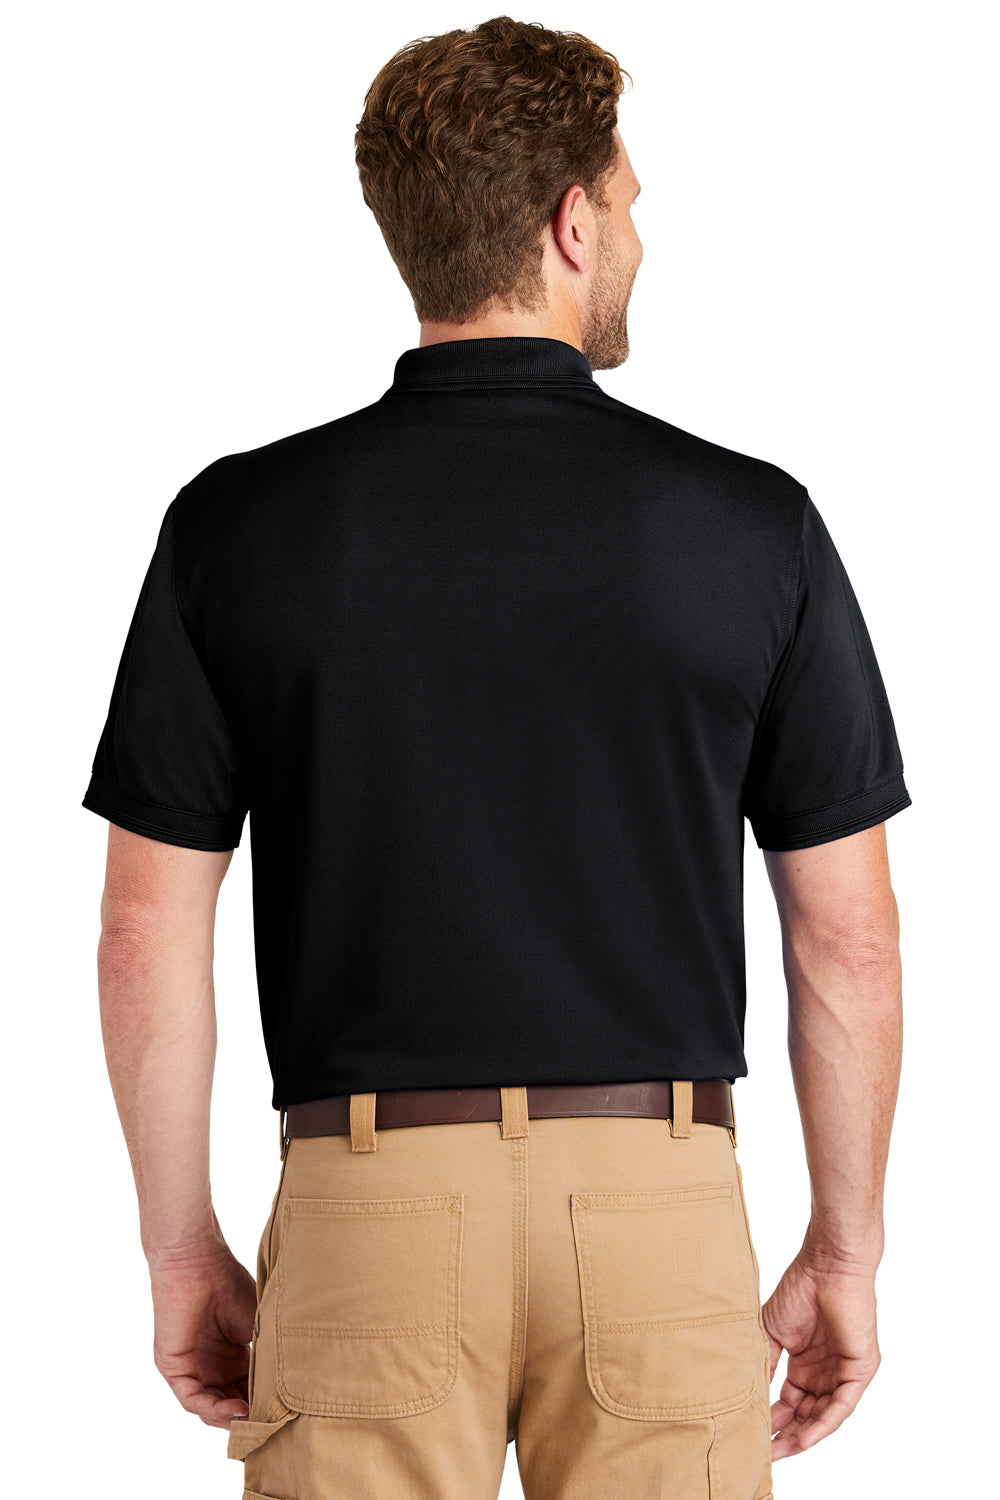 CornerStone CS4020P Mens Industrial Moisture Wicking Short Sleeve Polo Shirt w/ Pocket Navy Blue Back